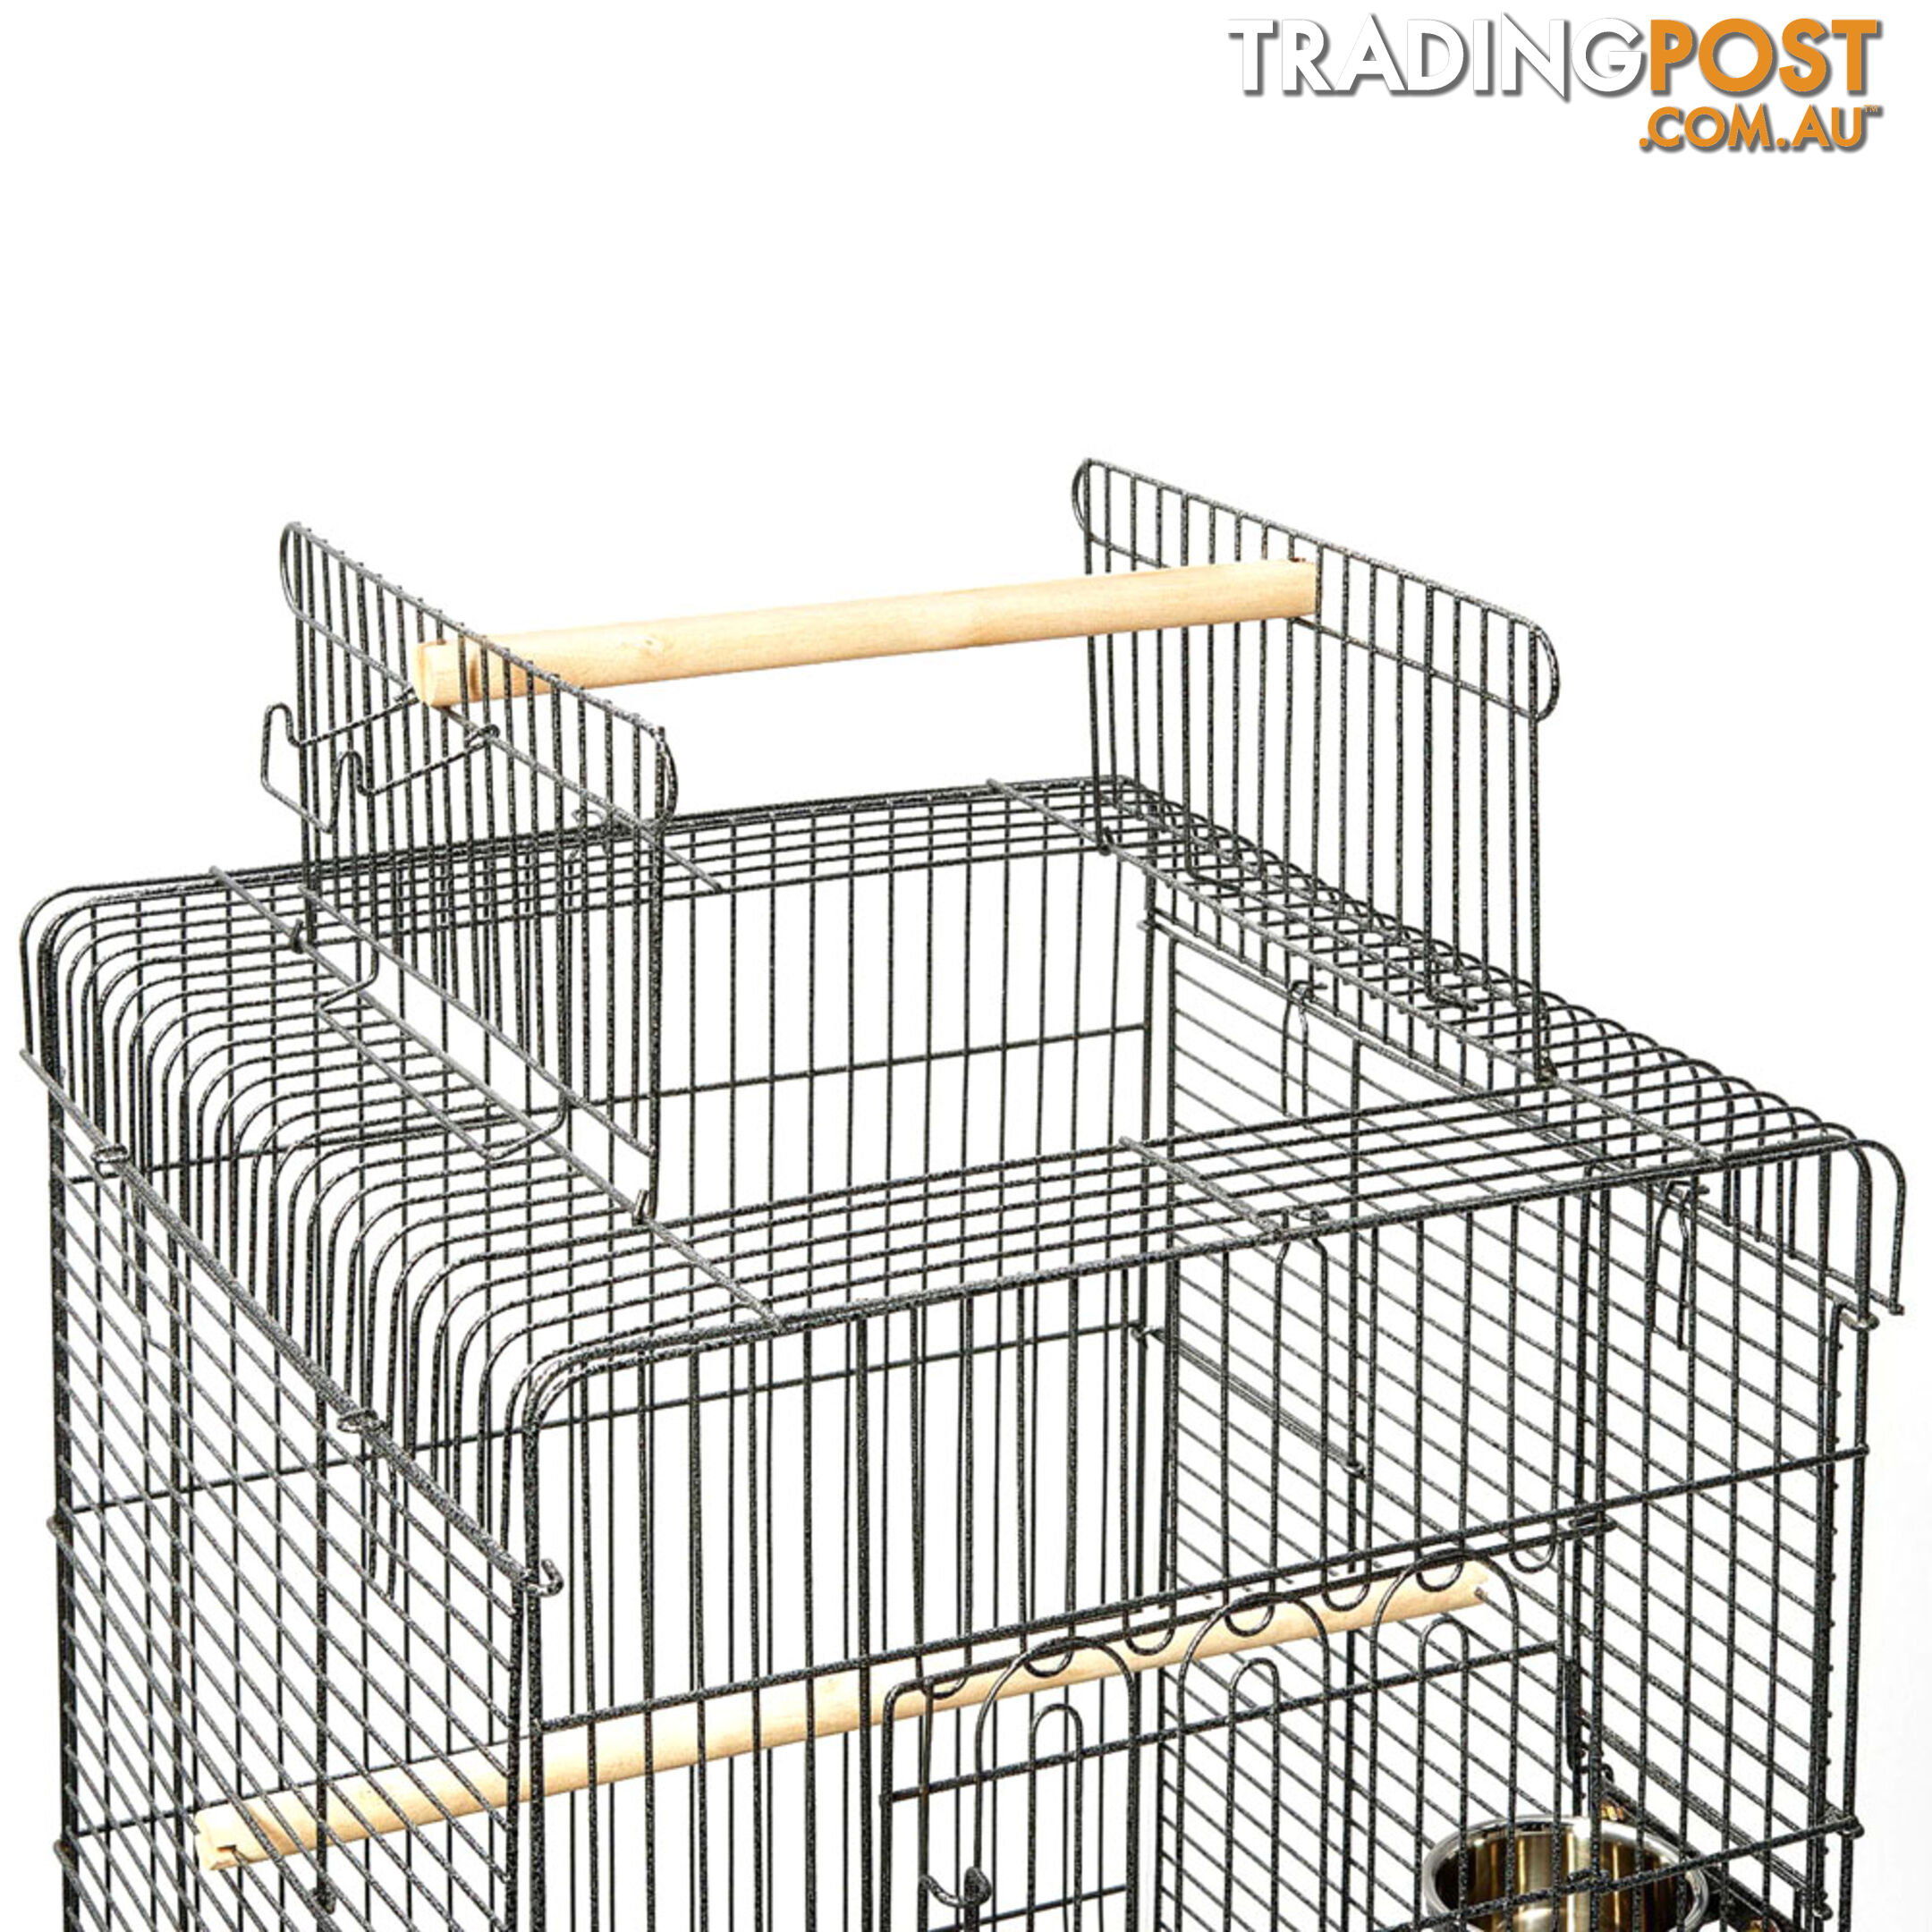 Parrot Pet Aviary Bird Cage w/ Open Roof 145cm Black